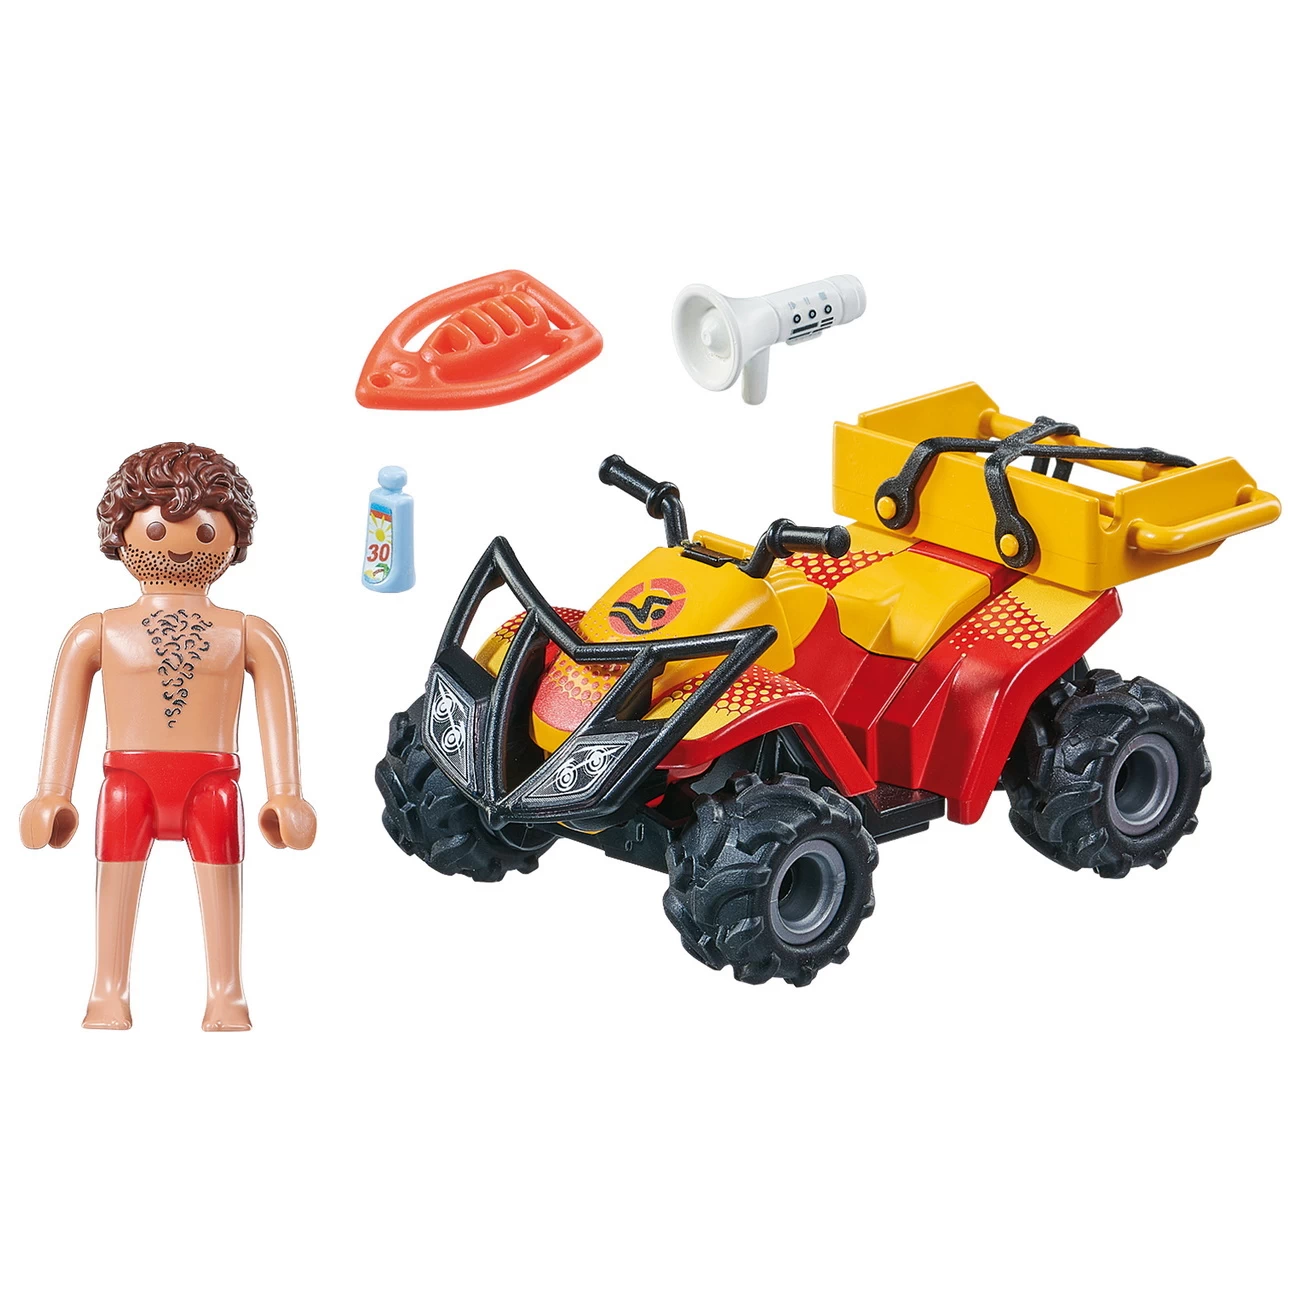 Playmobil 71040 - Rettungsschwimmer Quad (City Action)